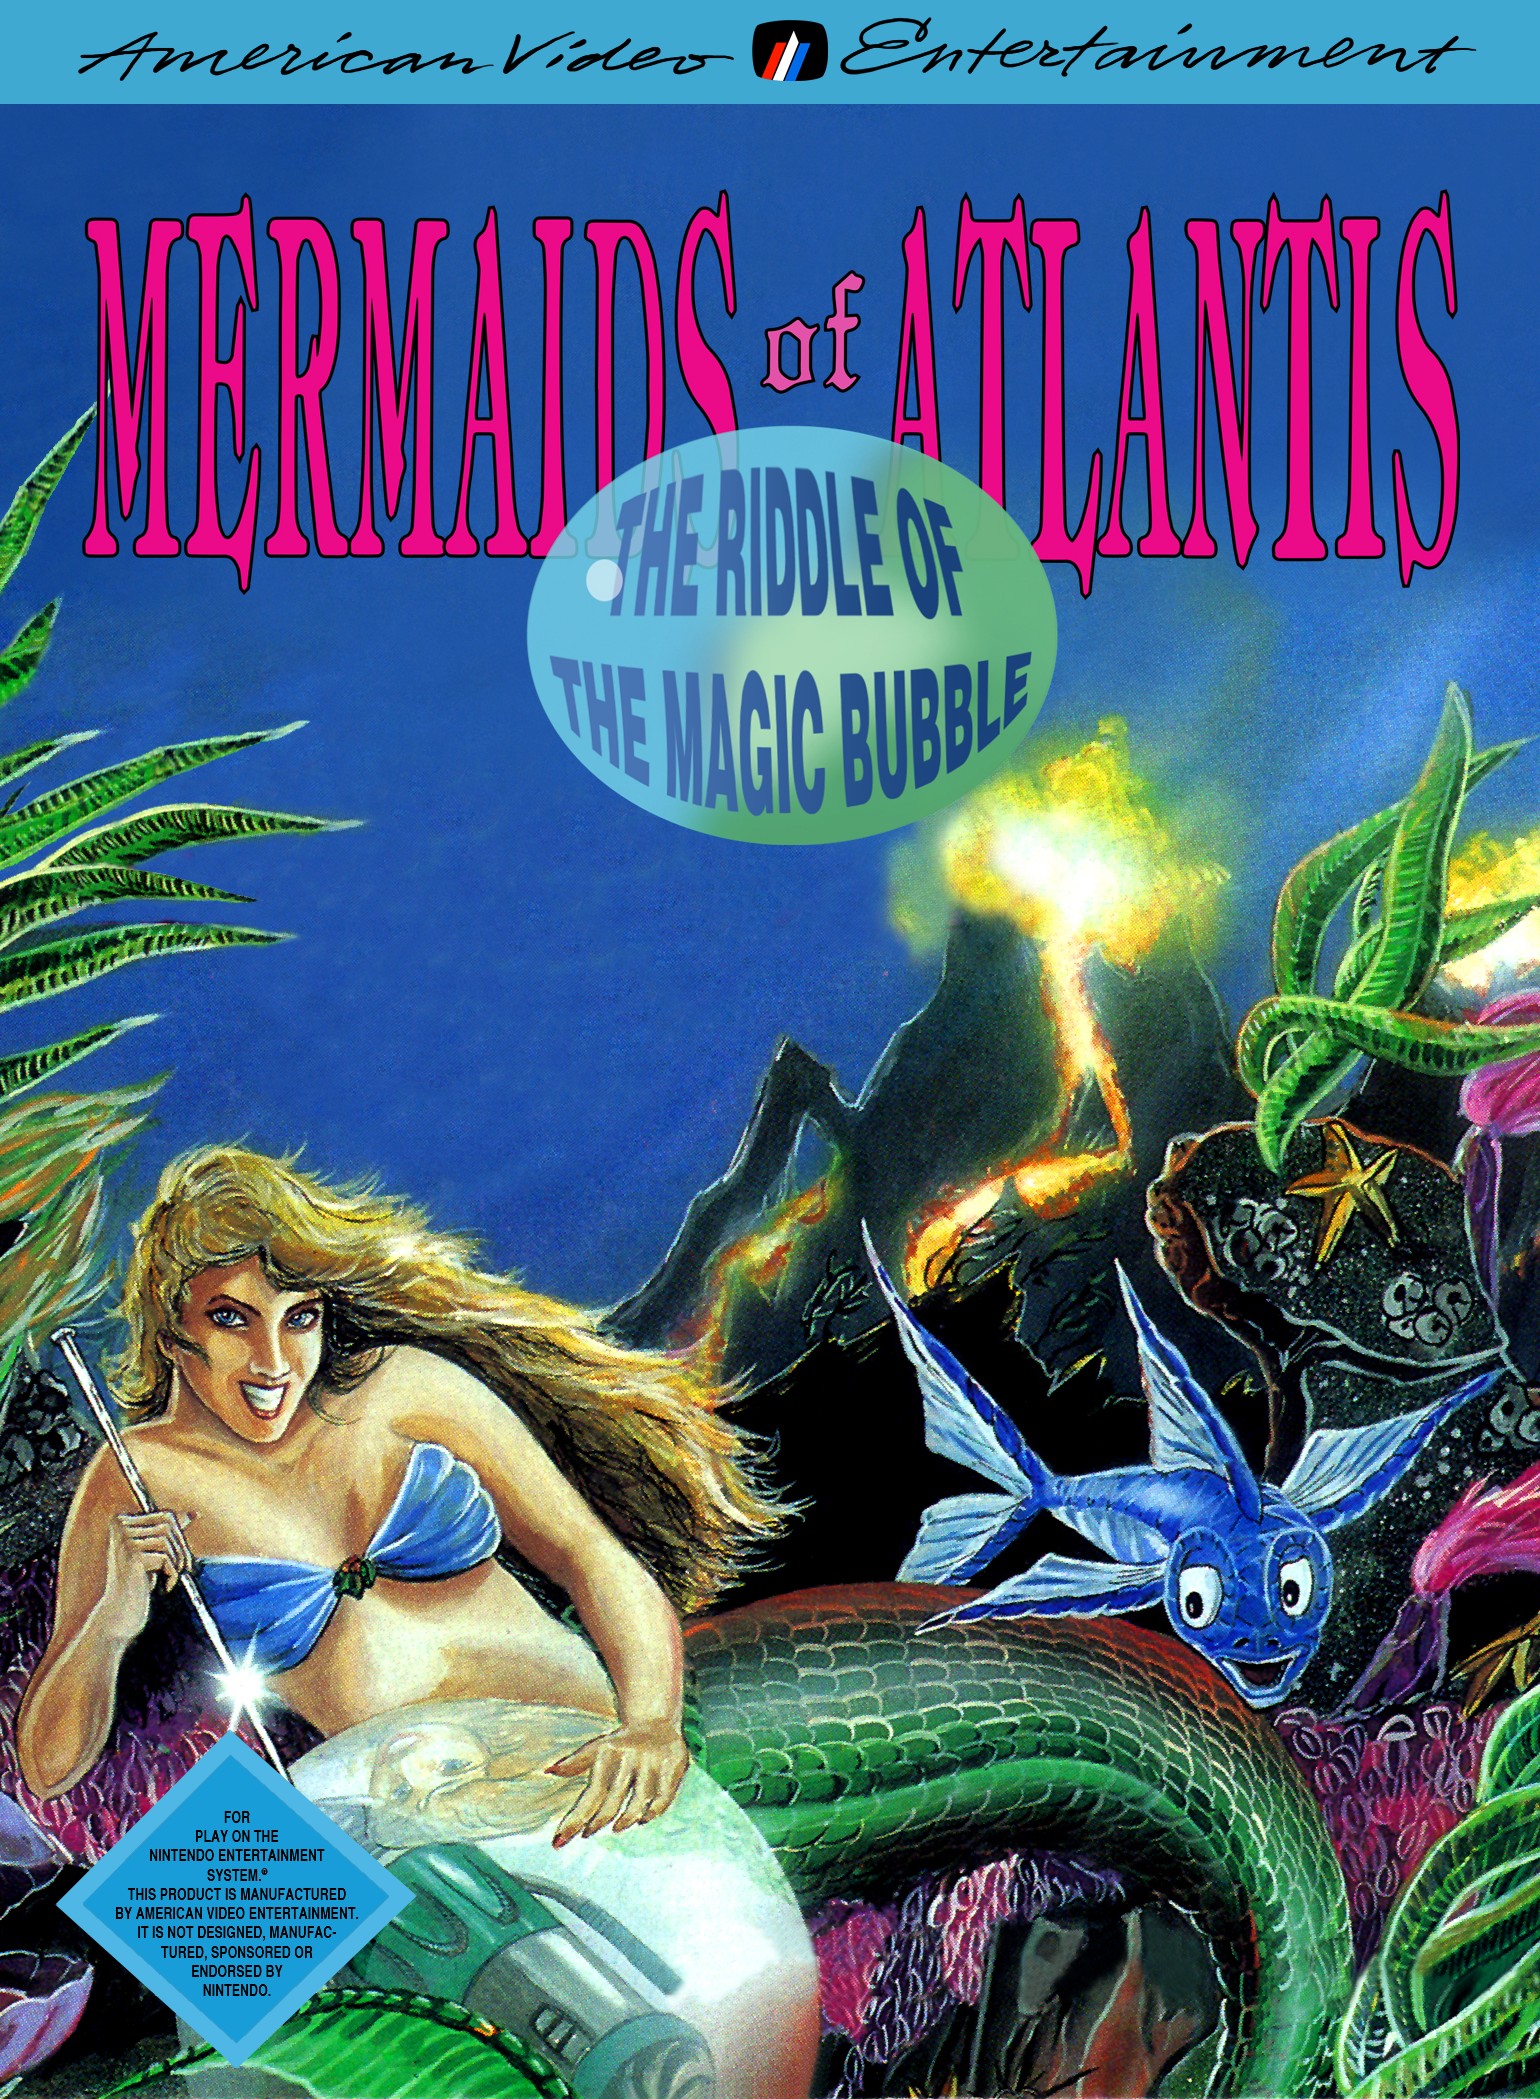 'Mermaids of Atlantis'